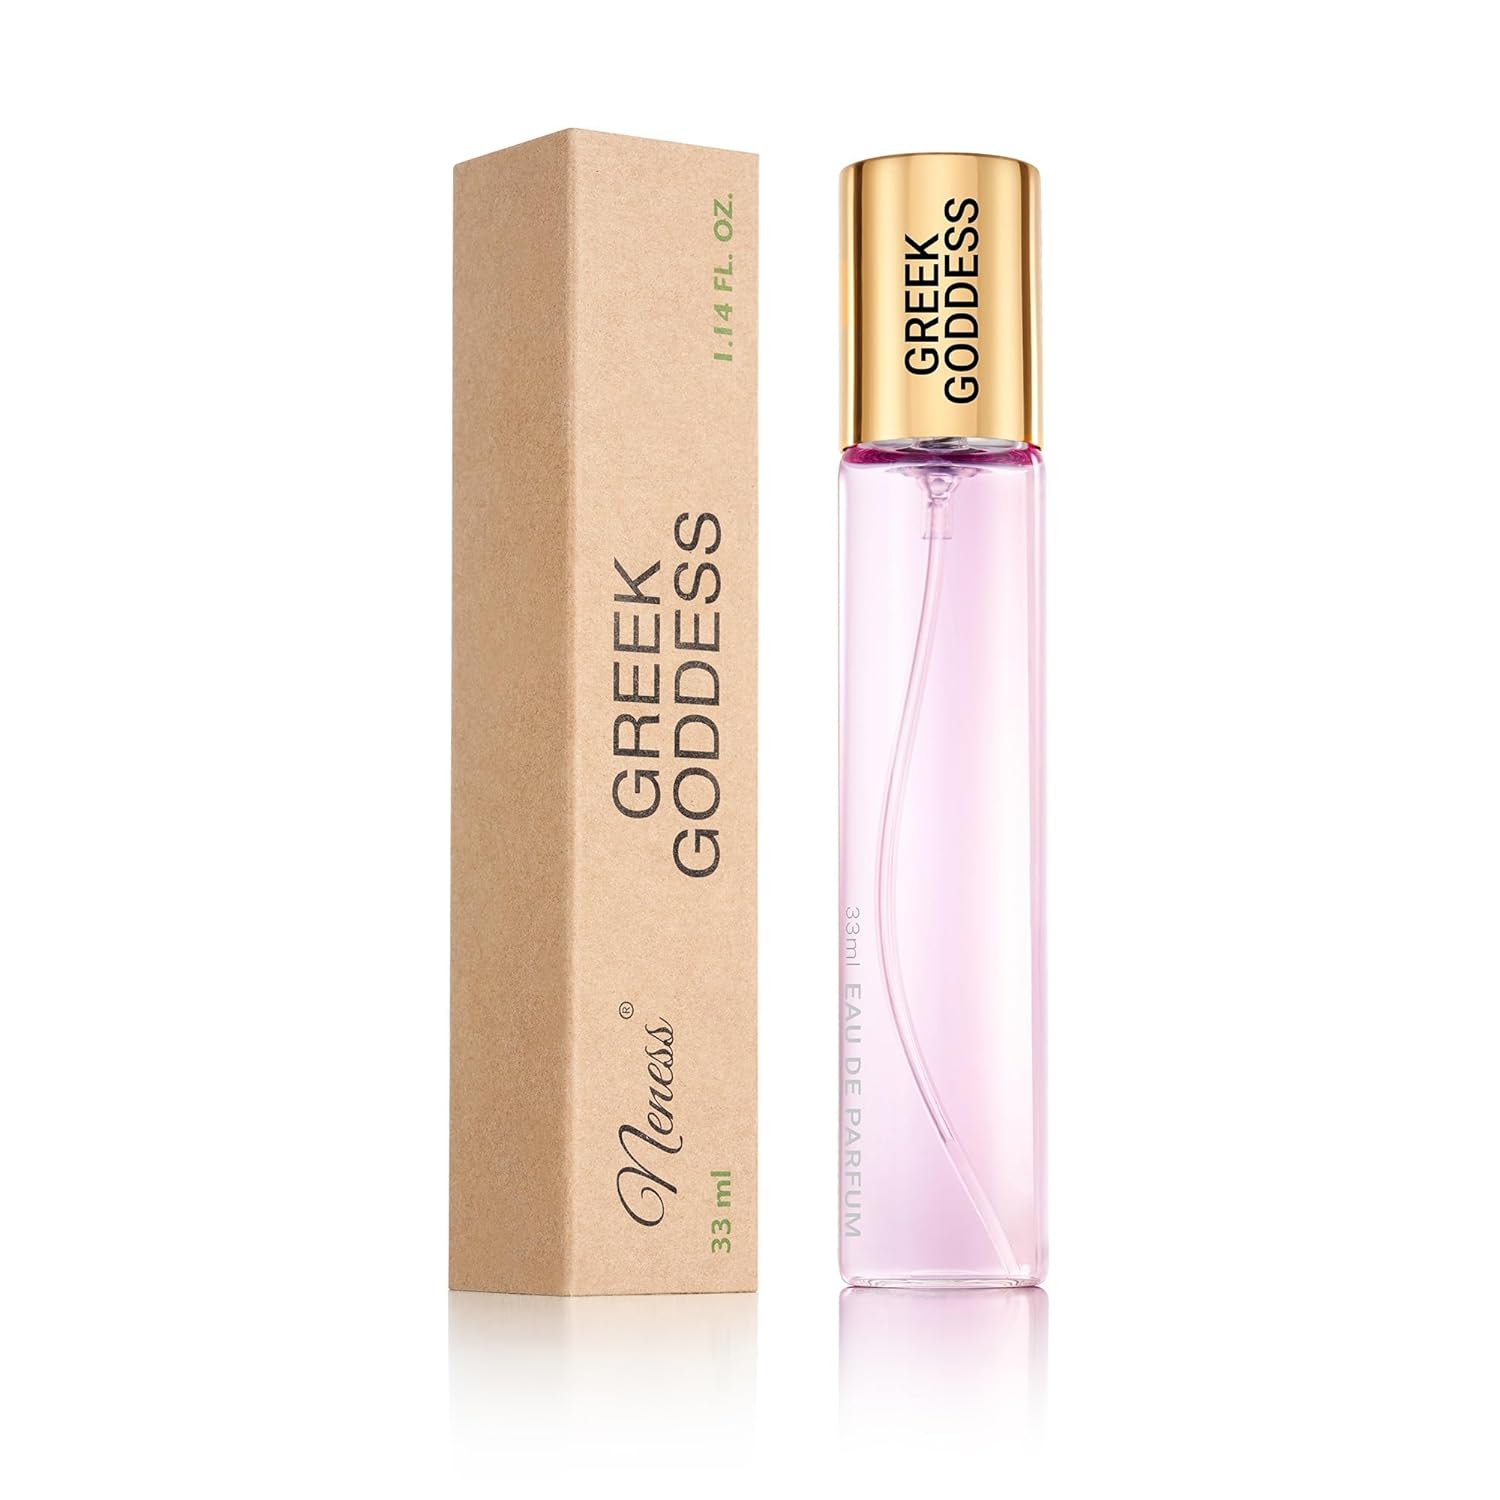 Neness be Olympiqua Women\'s Perfume, Eau de Parfum, Bold and Feminine Fragrance for Any Occasion, 33 ml